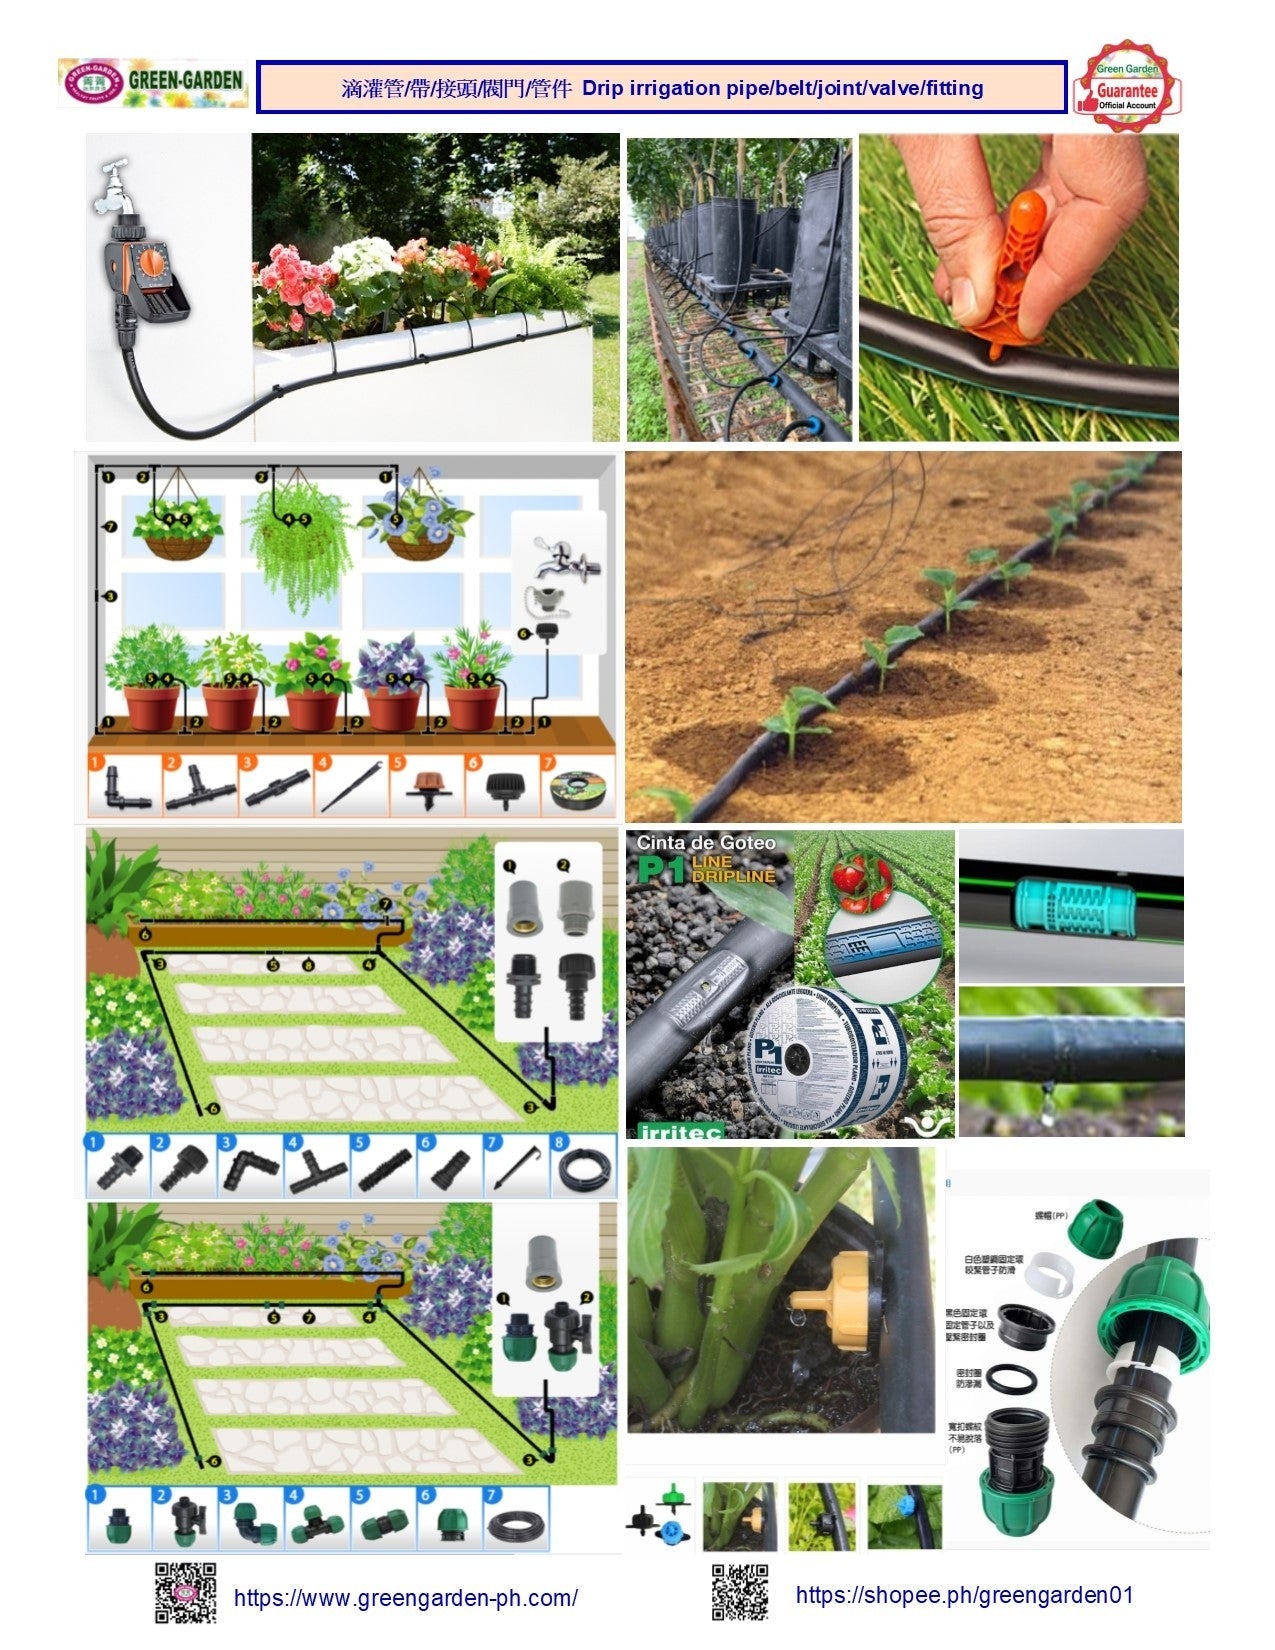 Drip Irrigation System - One-way spray head +ND-5146 BG89